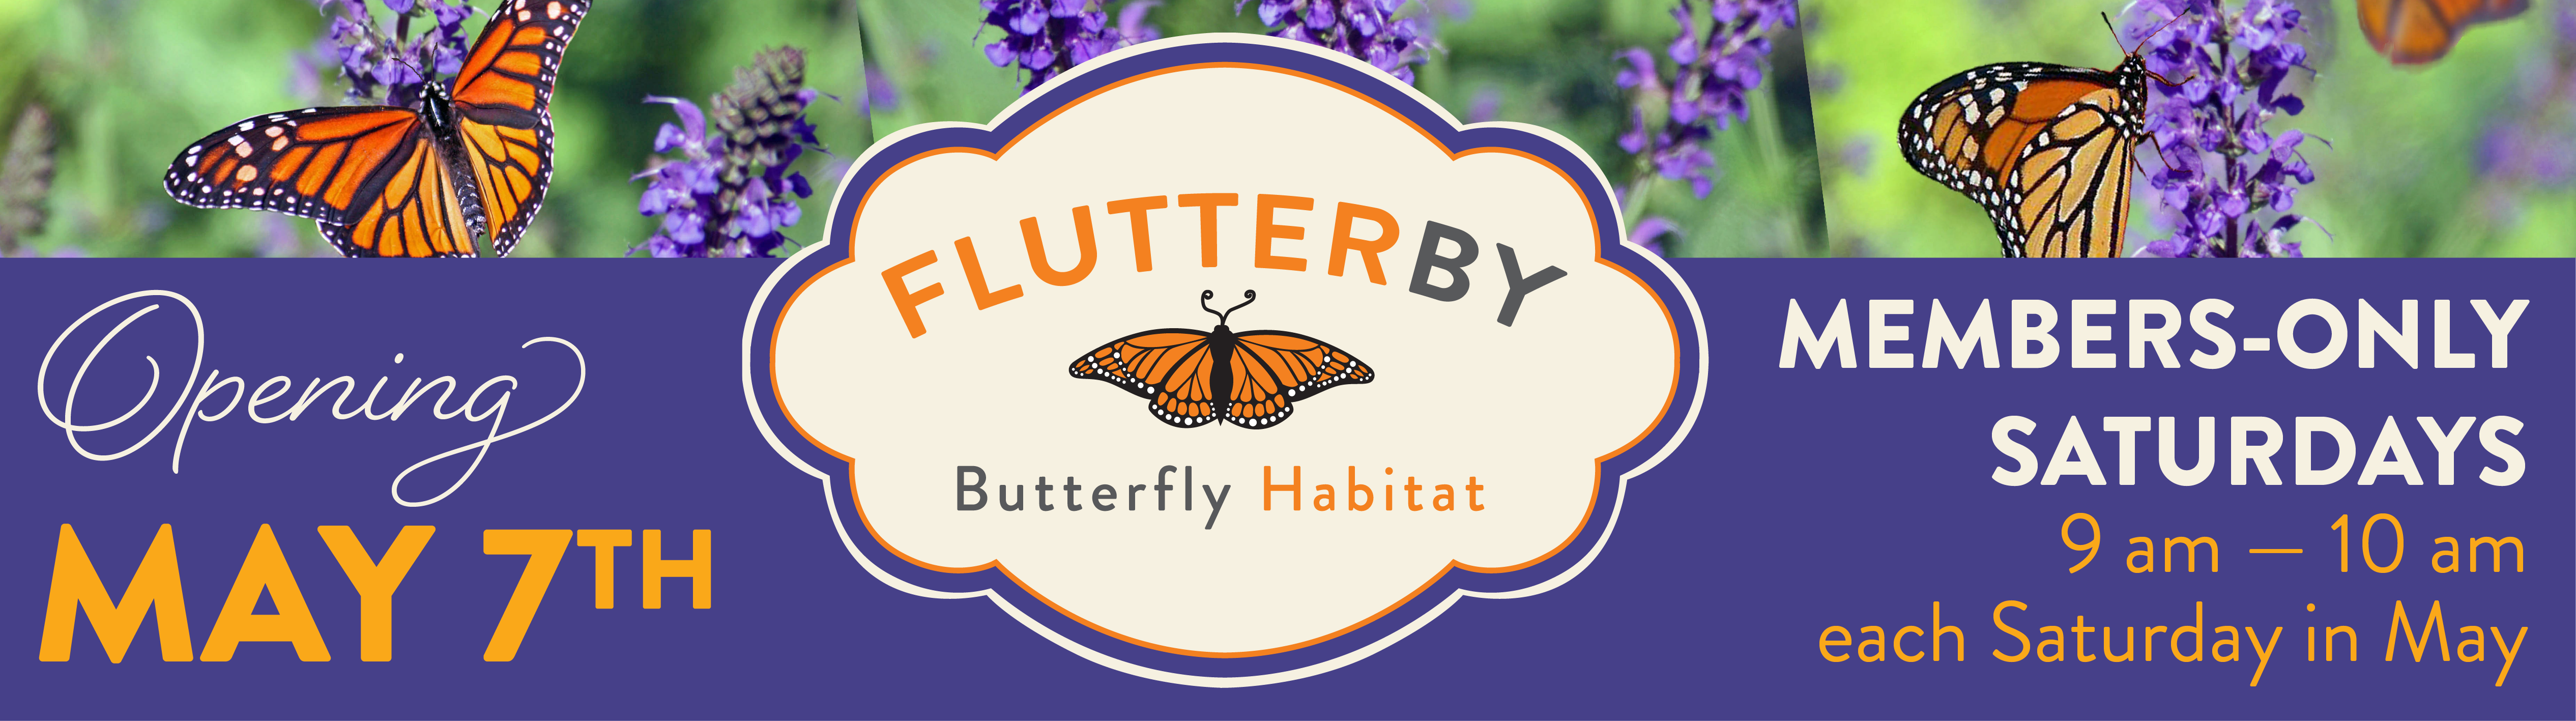 https://catawbascience.org/flutter-by-butterfly-habitat